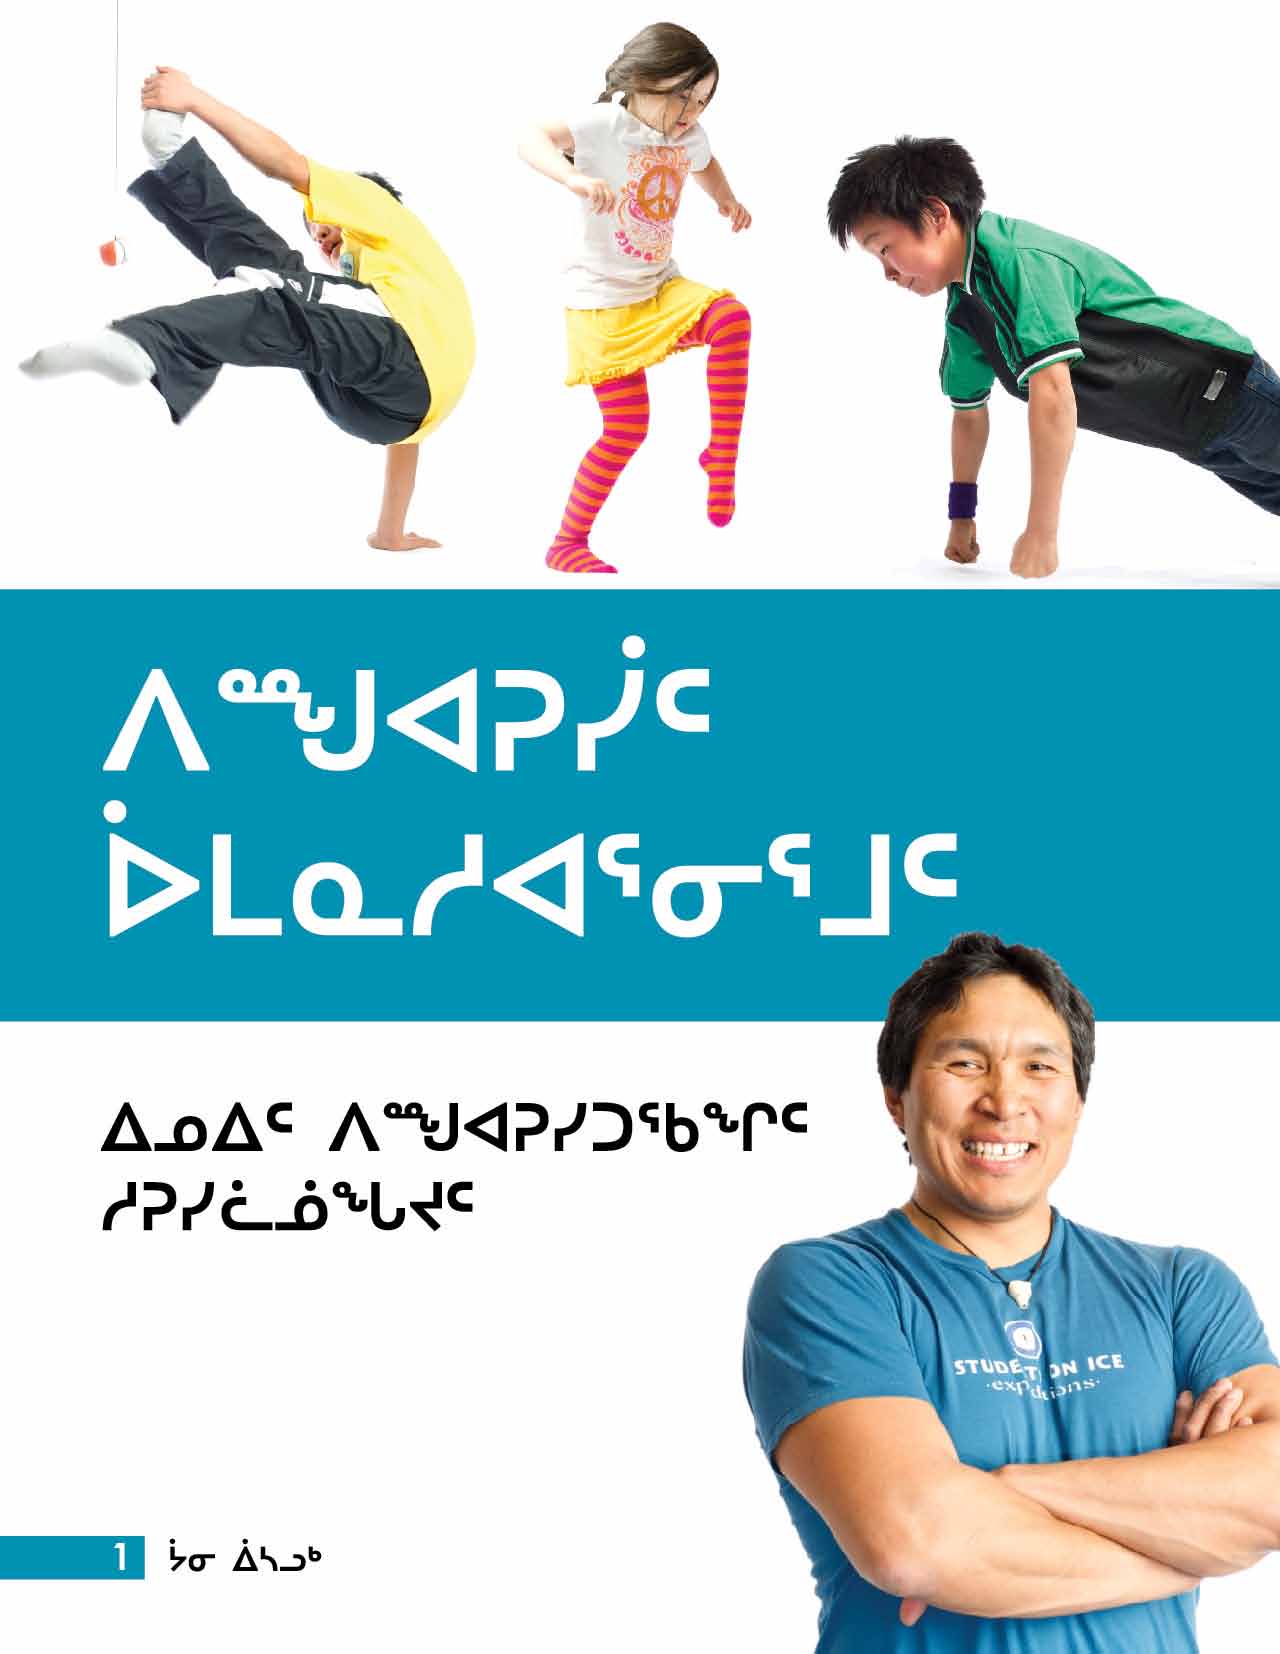 Inuktitut Cover